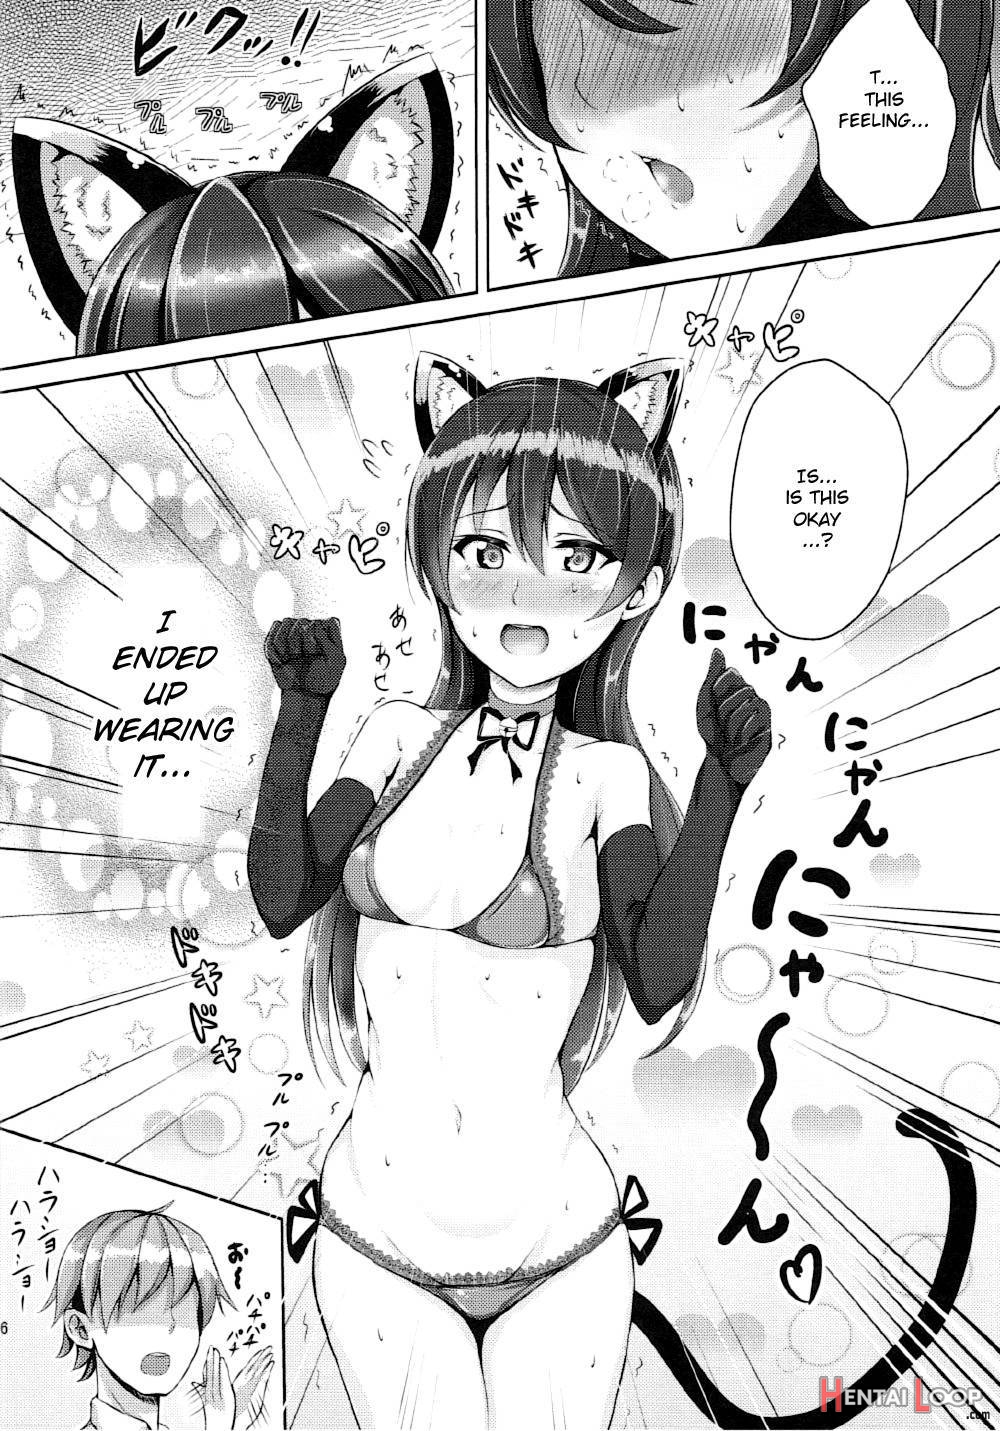 Umi-chan To Nyannyan page 3